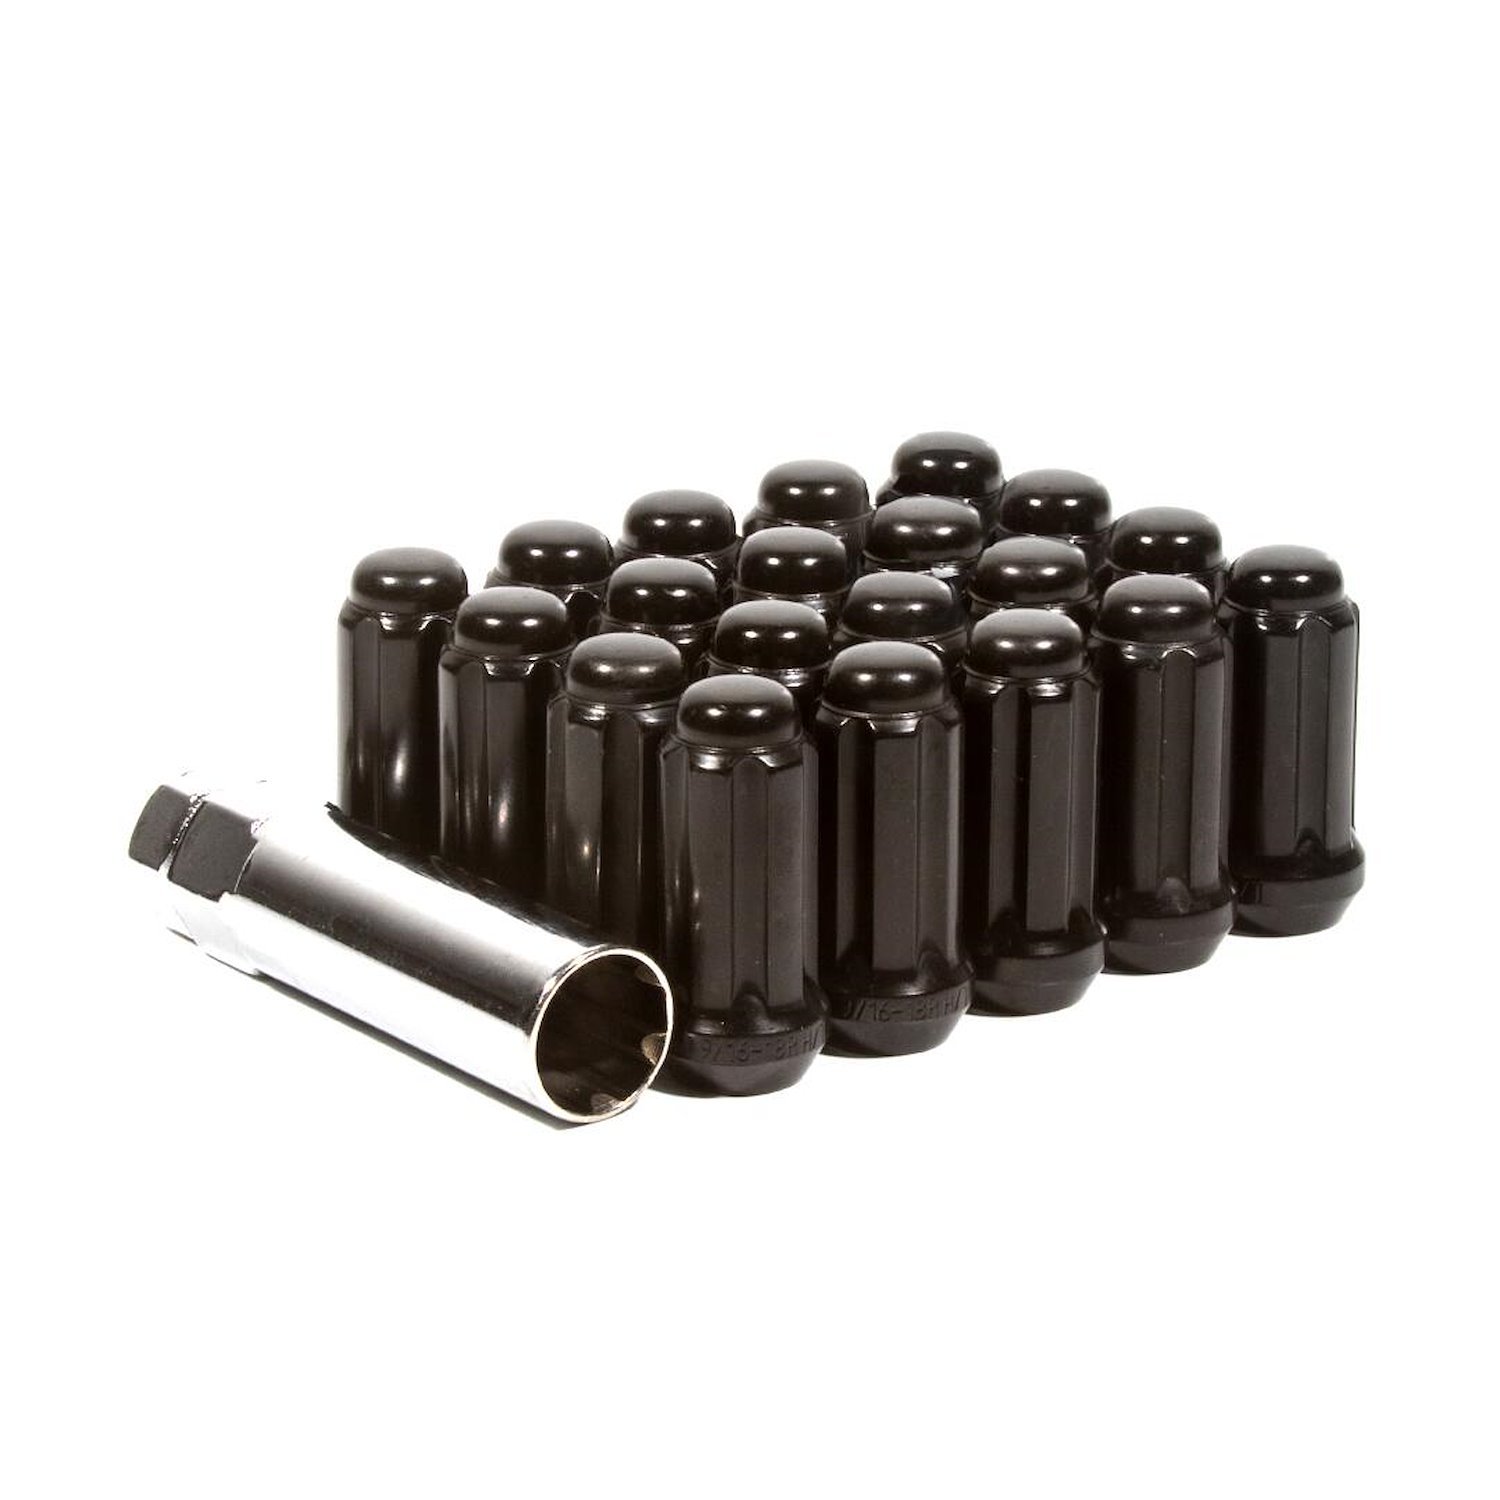 LK-W5642STB Lug Kit, Spline, M14X2.0, 6 Lug Kit, Black, 24 Nuts